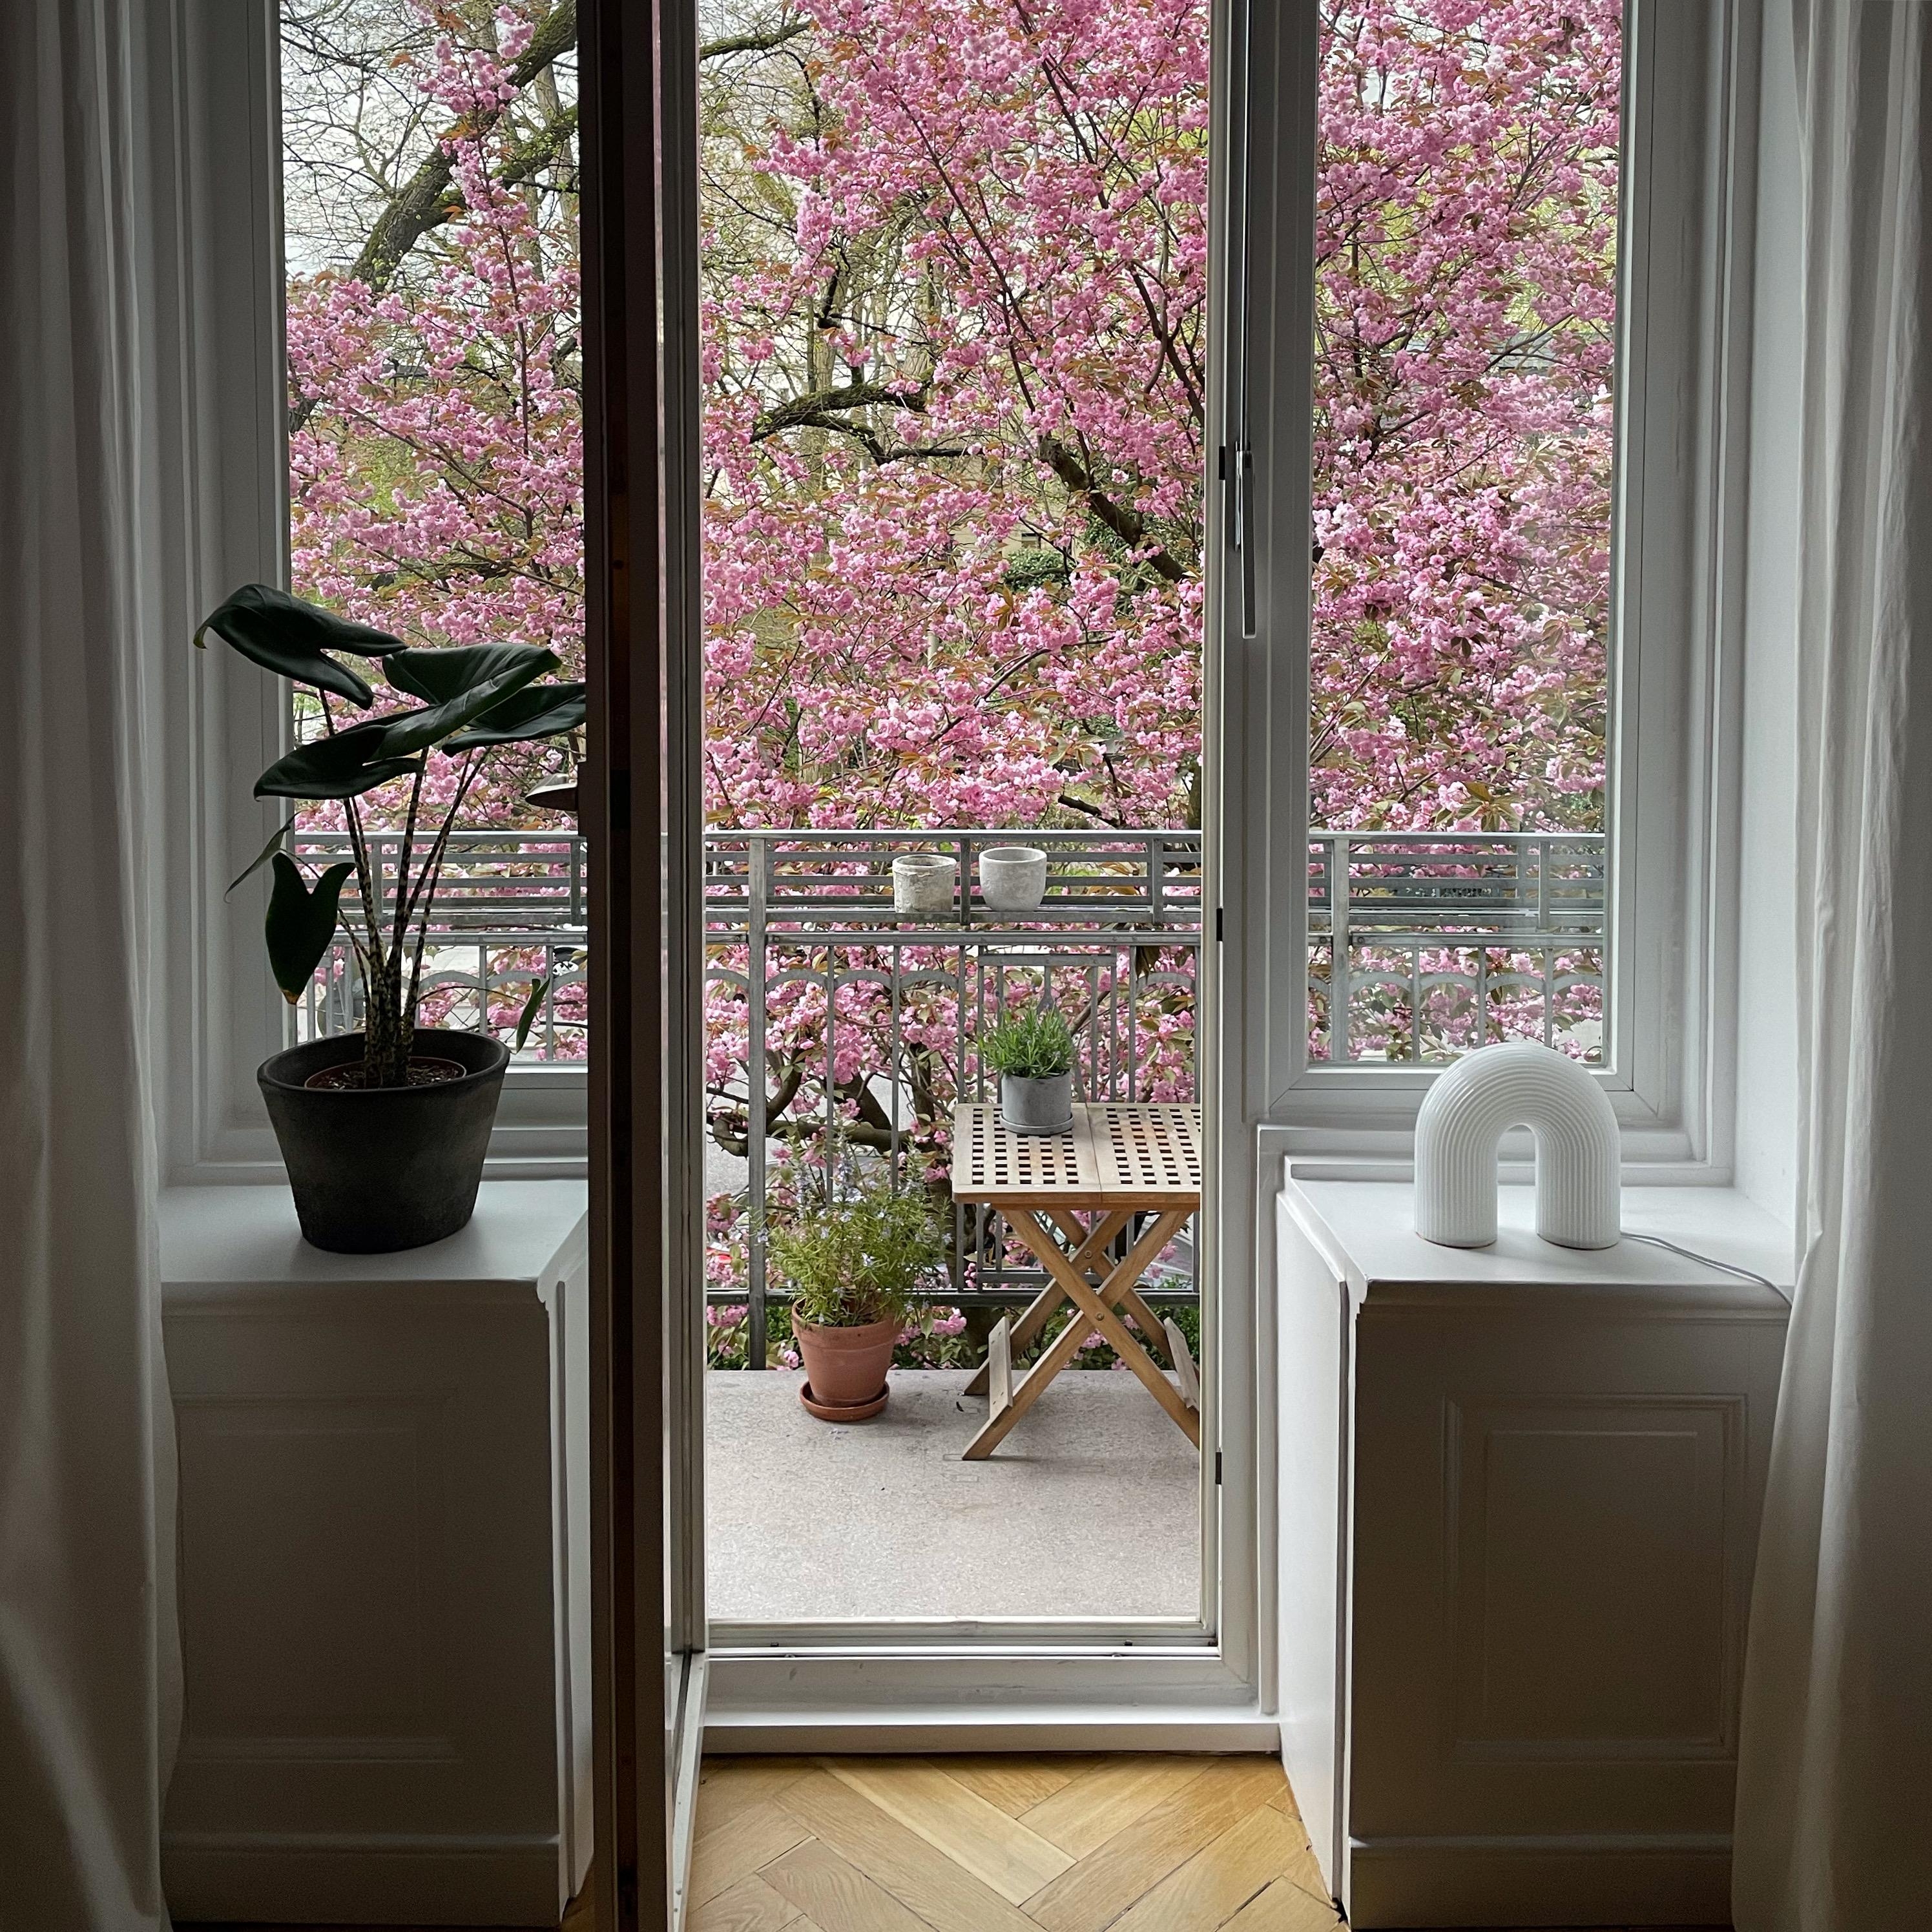 #balkon #kirschblüte #cherryblossom #living #wohnen #couchliebt 